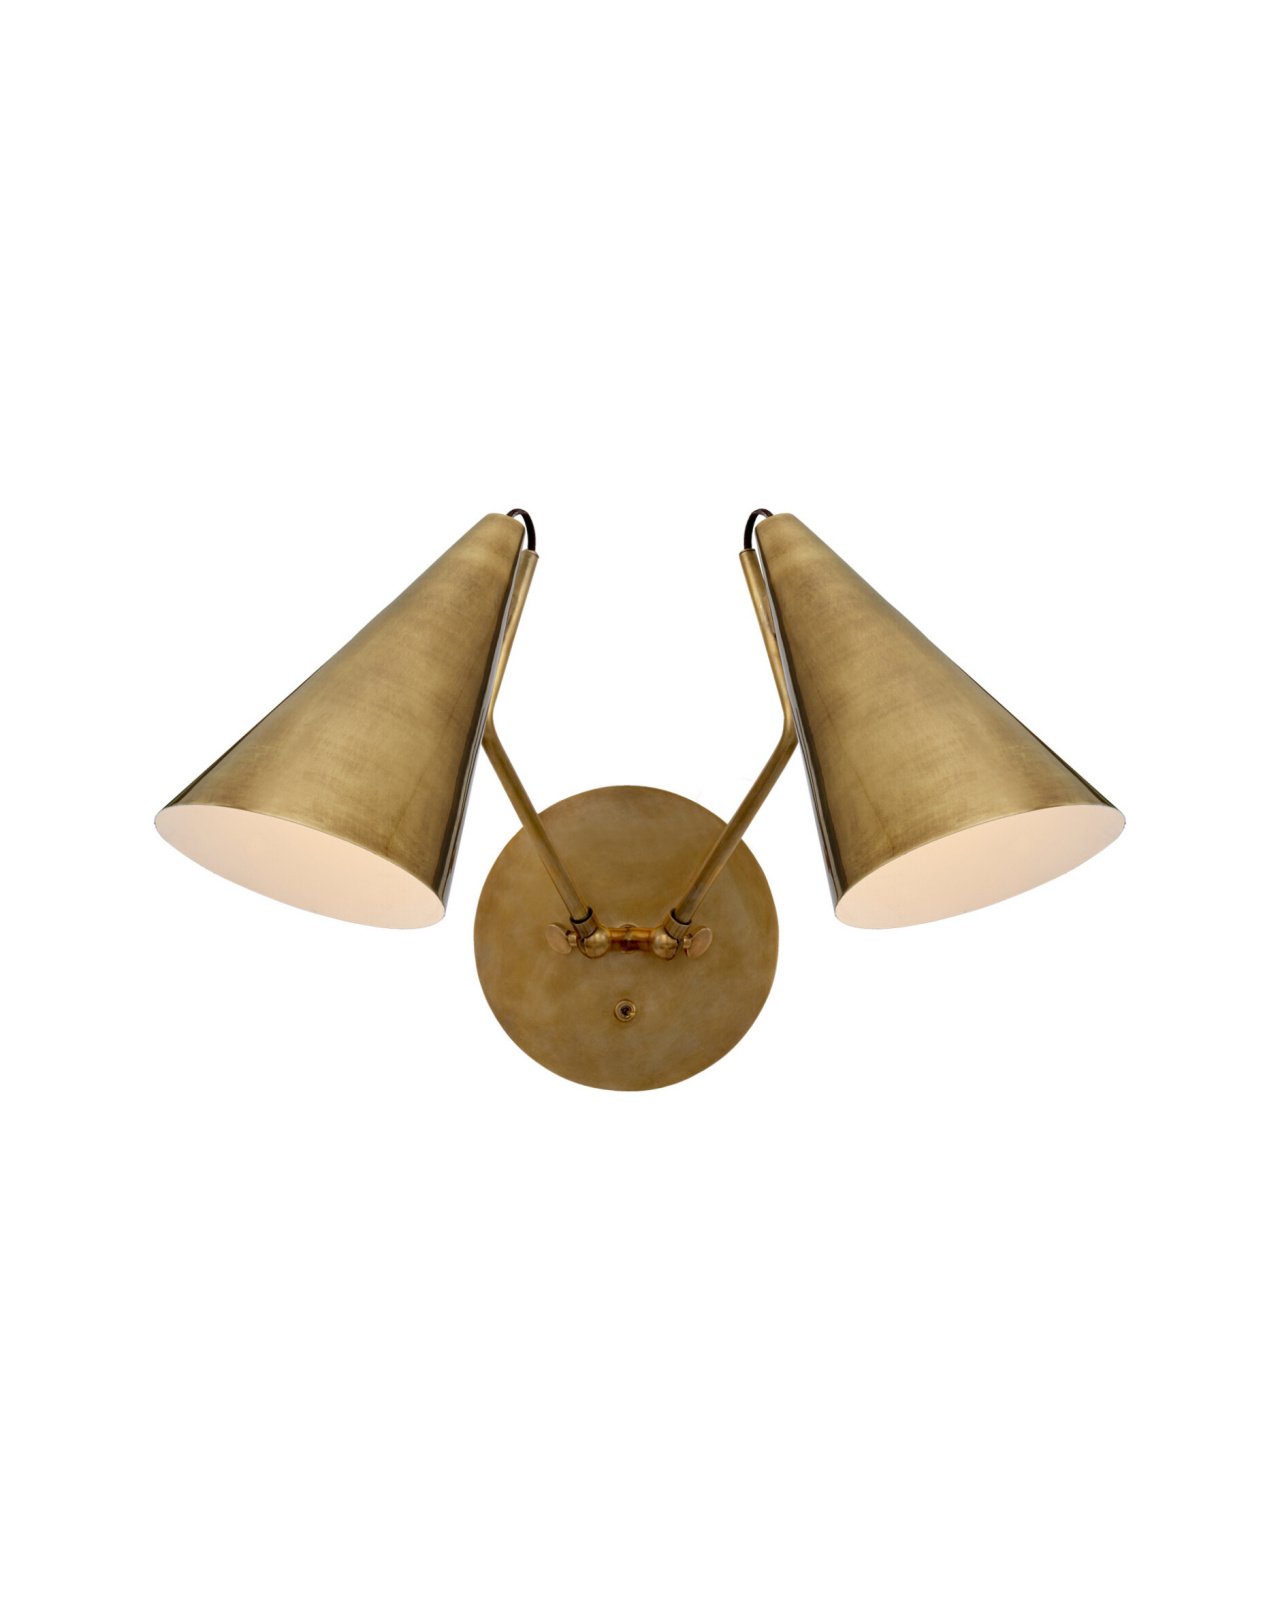 Clemente Double Sconce Antique Brass